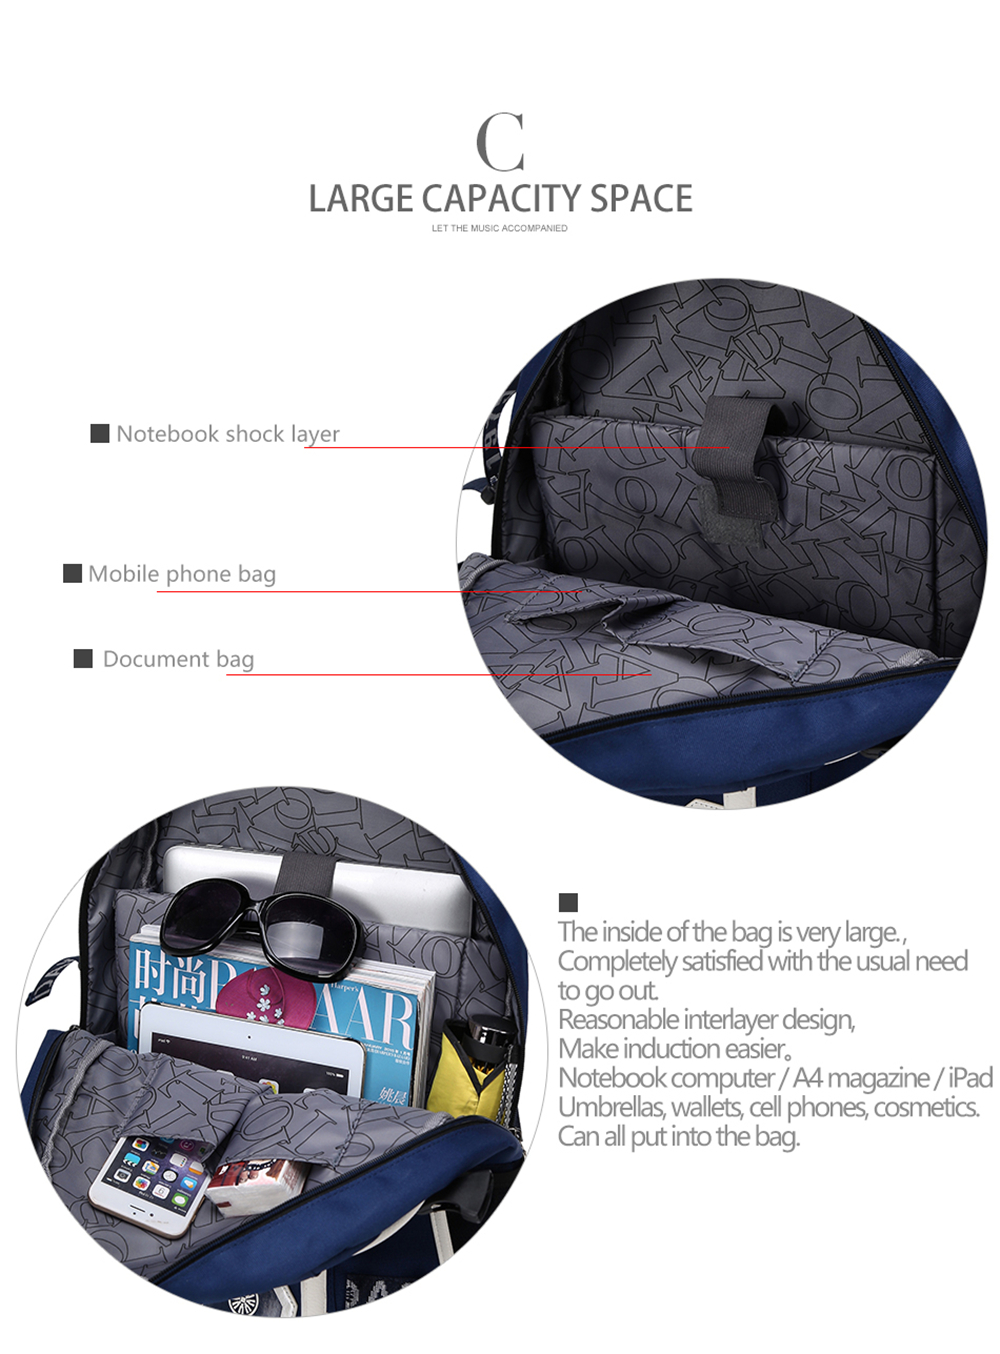 Aolida 8001 Multi-Function Large Capacity Backpack Laptop Bag